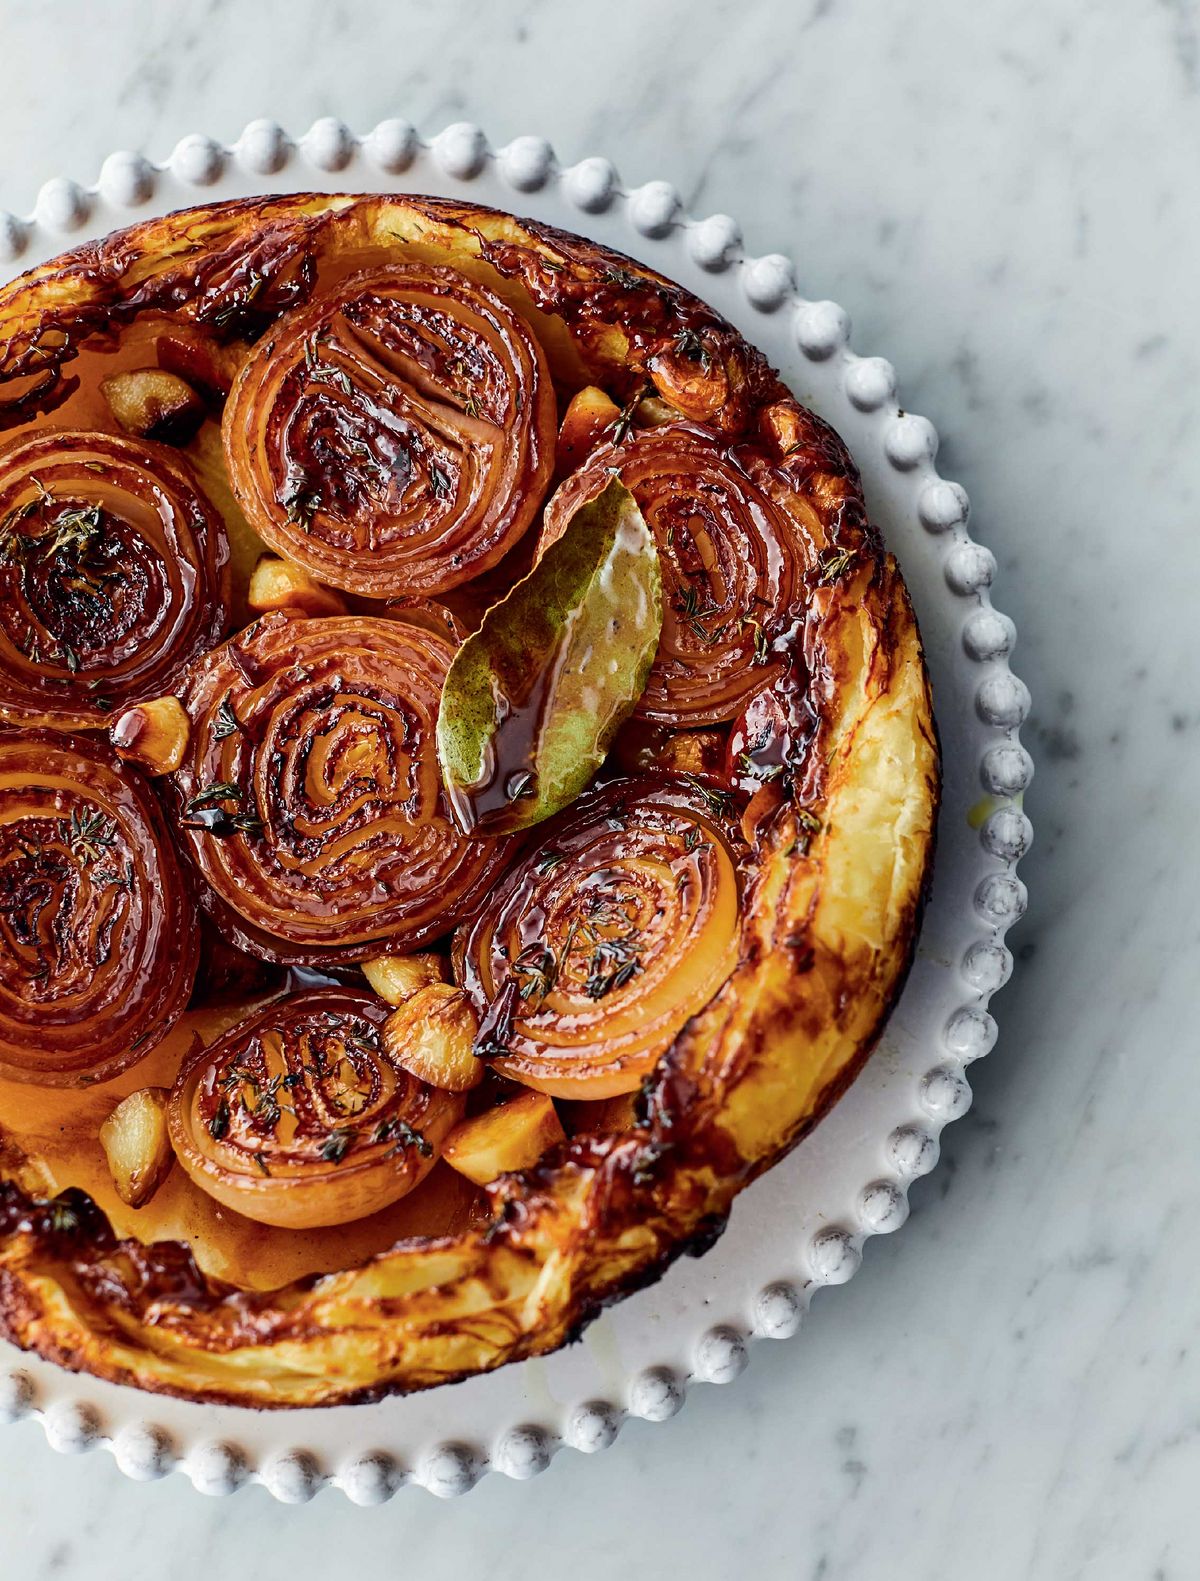 Jamie Oliver's best vegetarian Christmas recipes